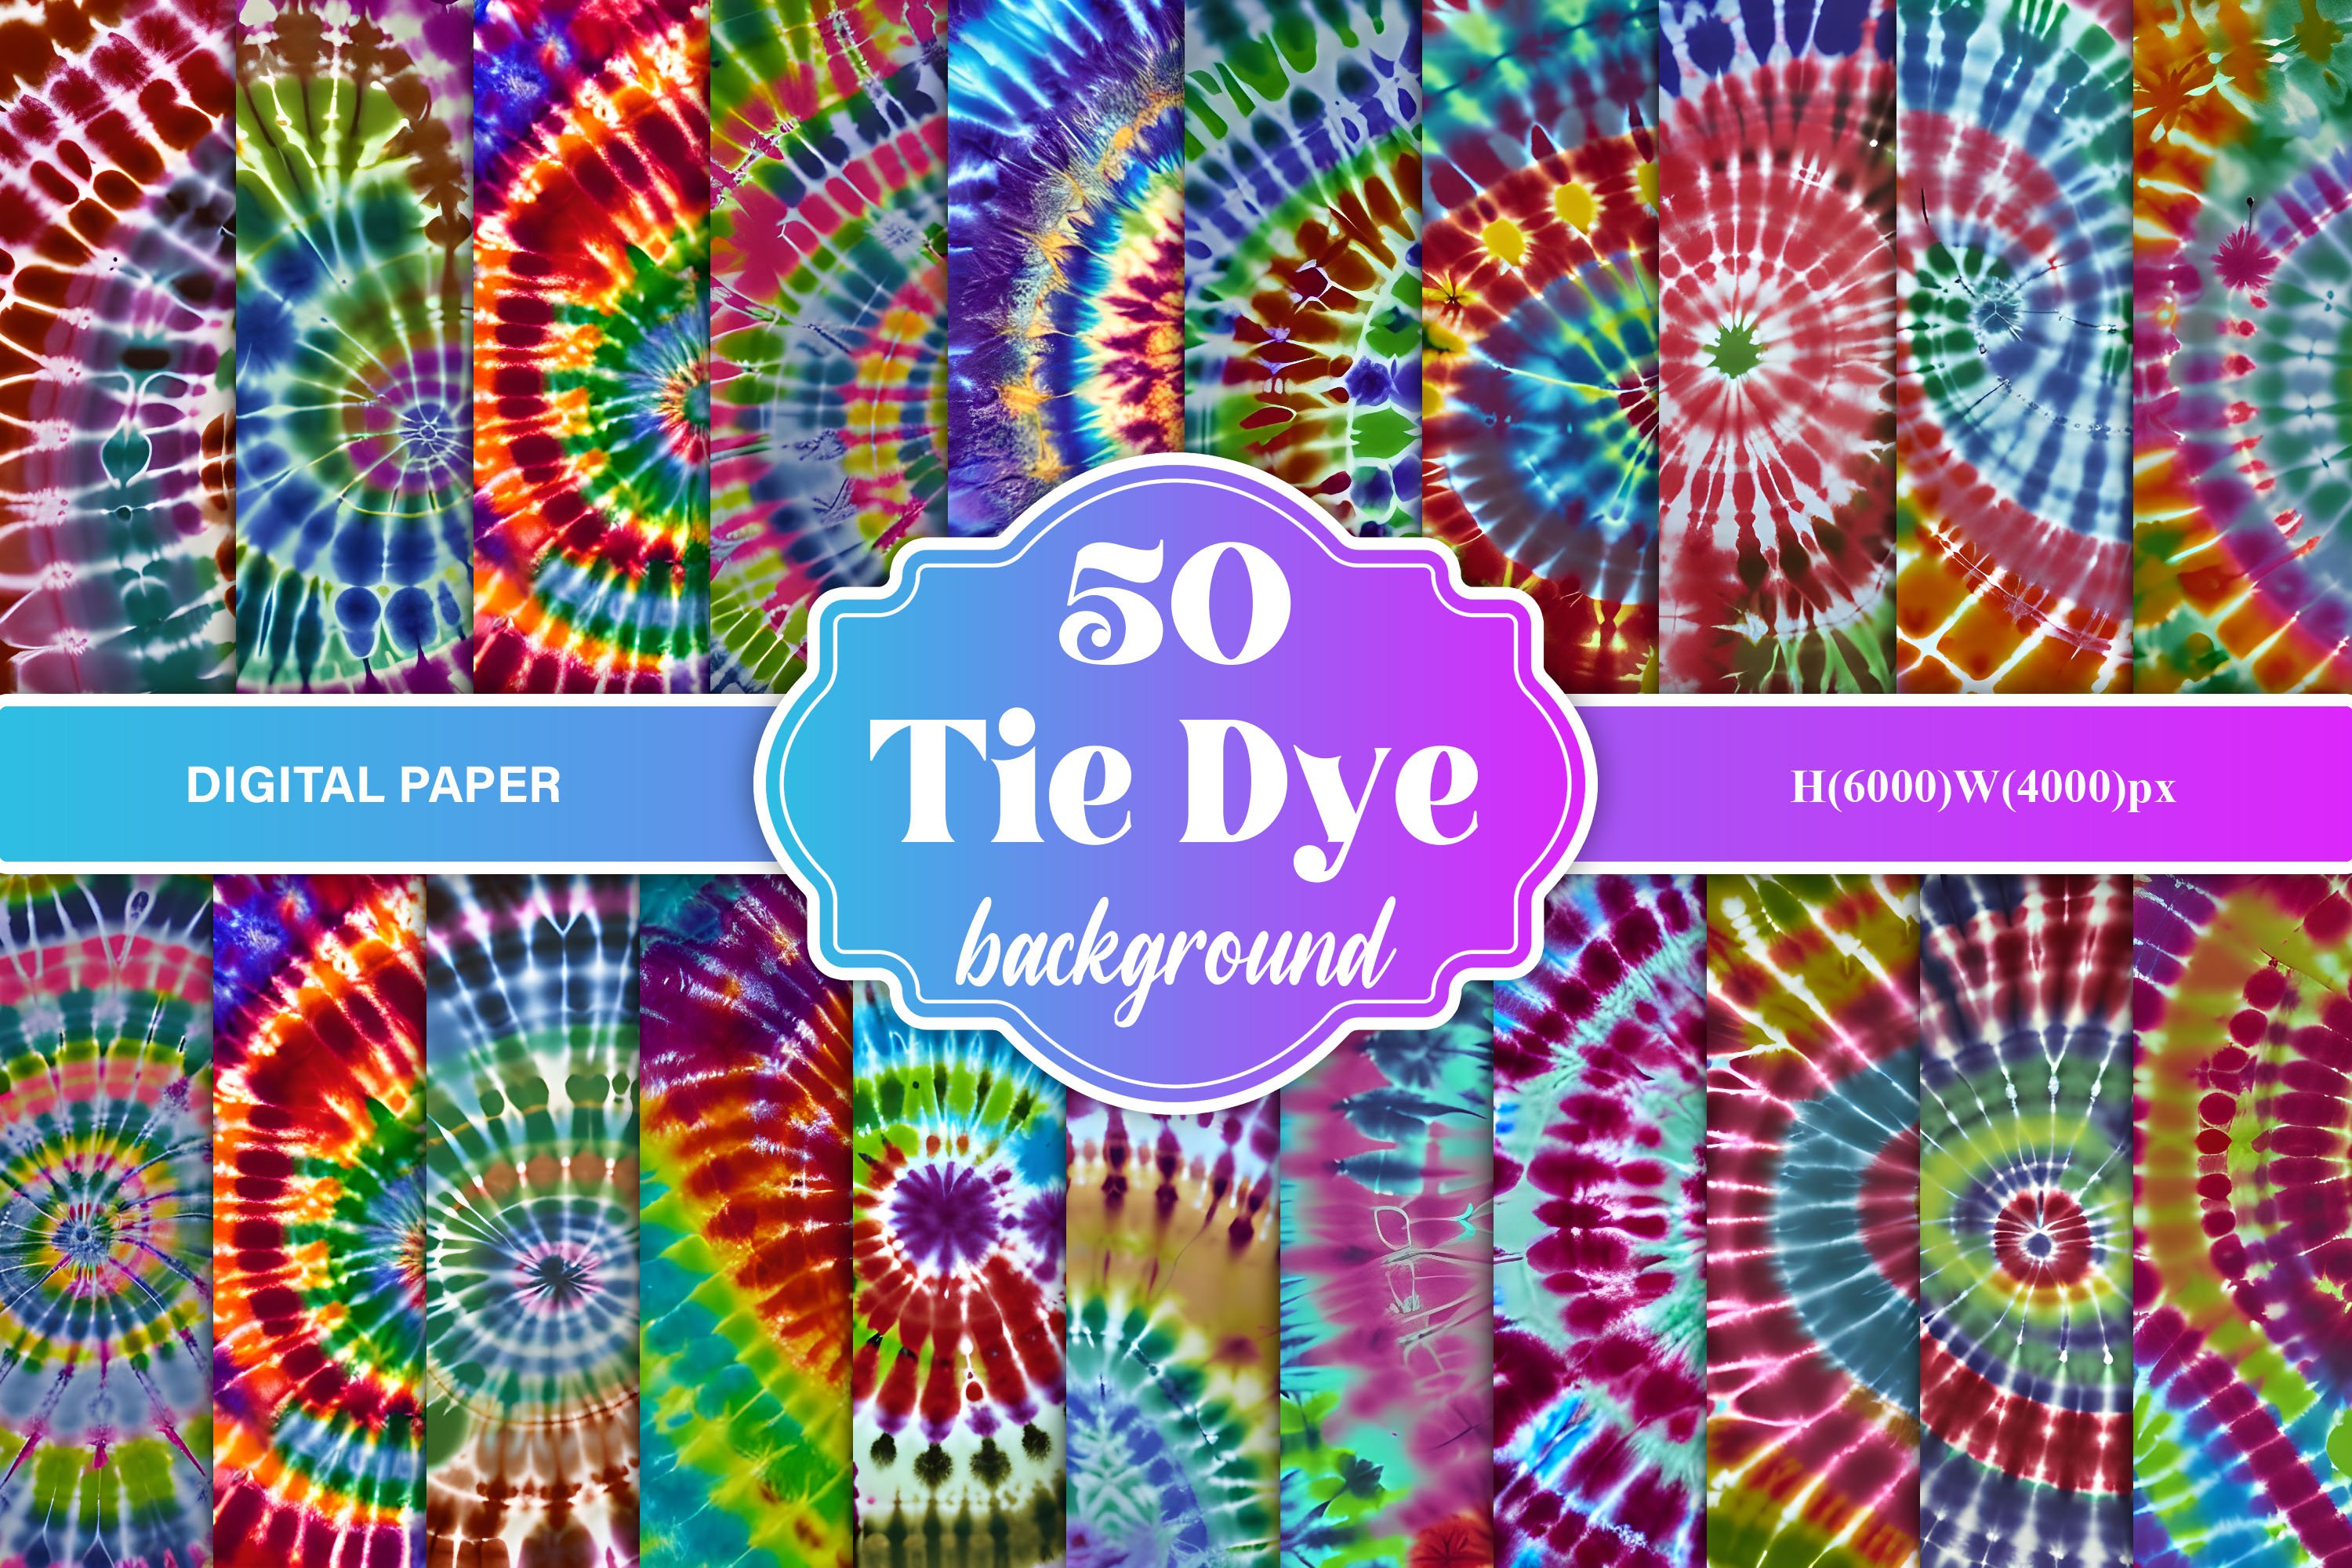 Tie Dye Digital Paper cover image.